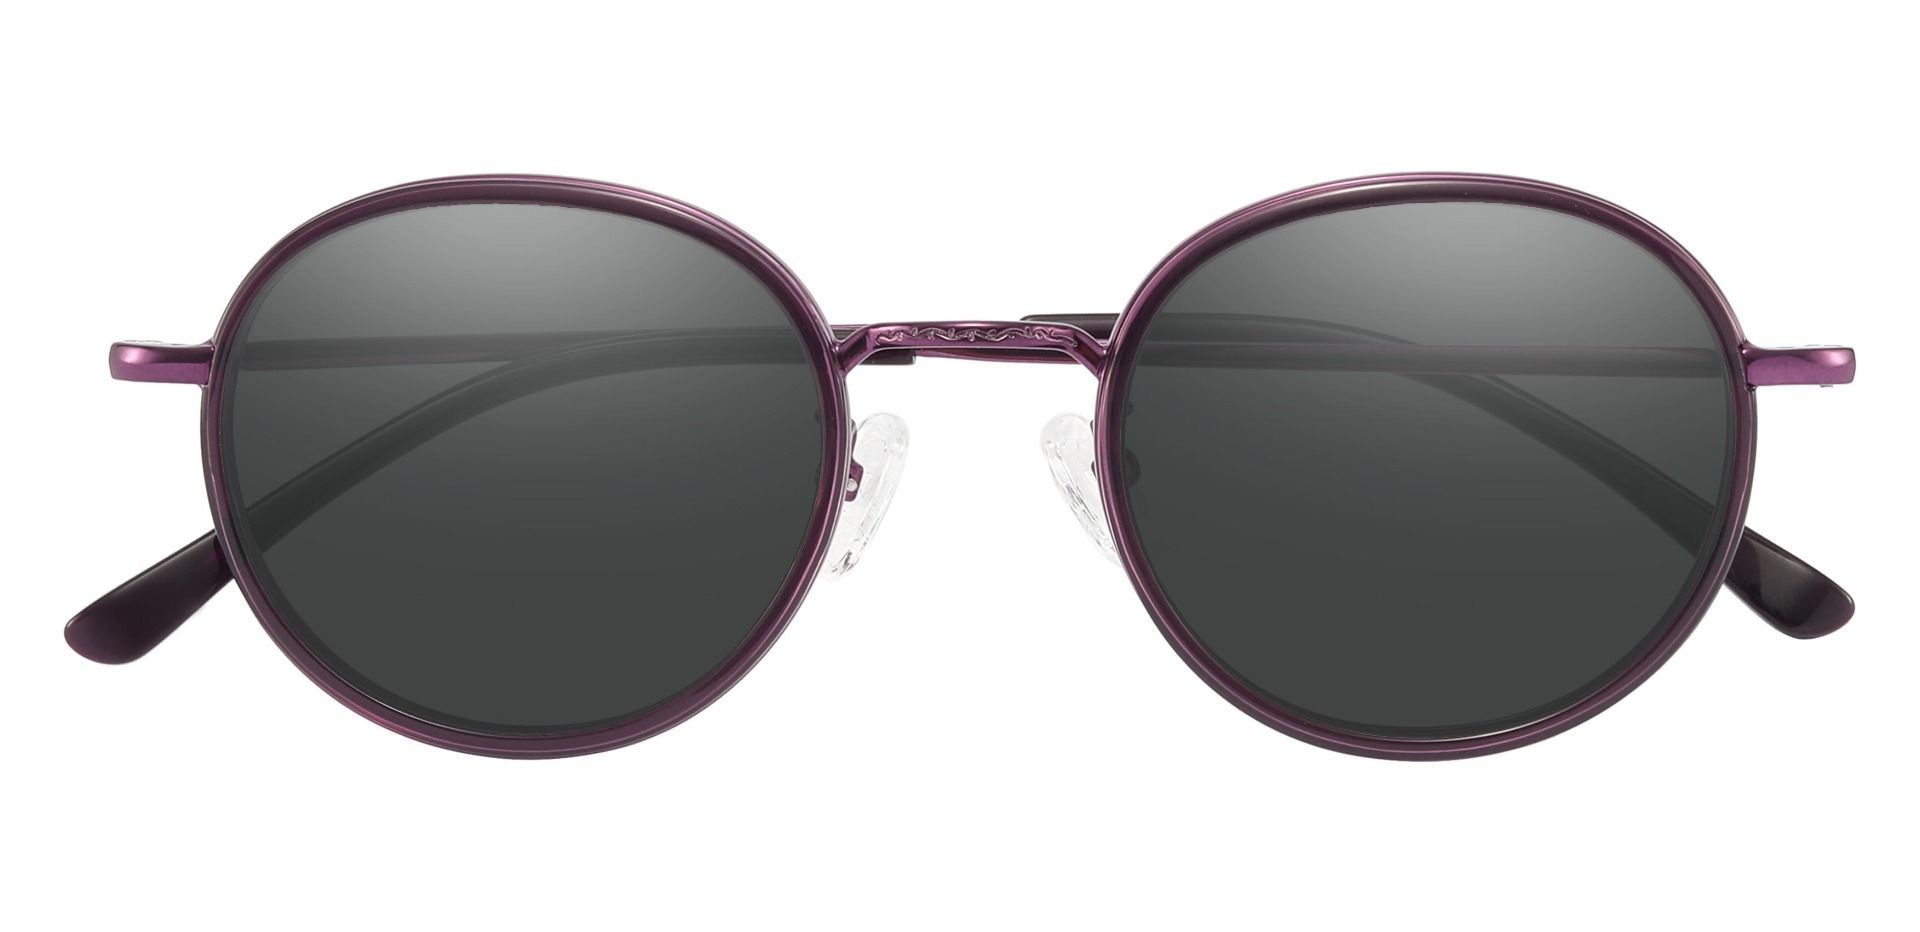 Eden Round Progressive Sunglasses - Purple Frame With Gray Lenses